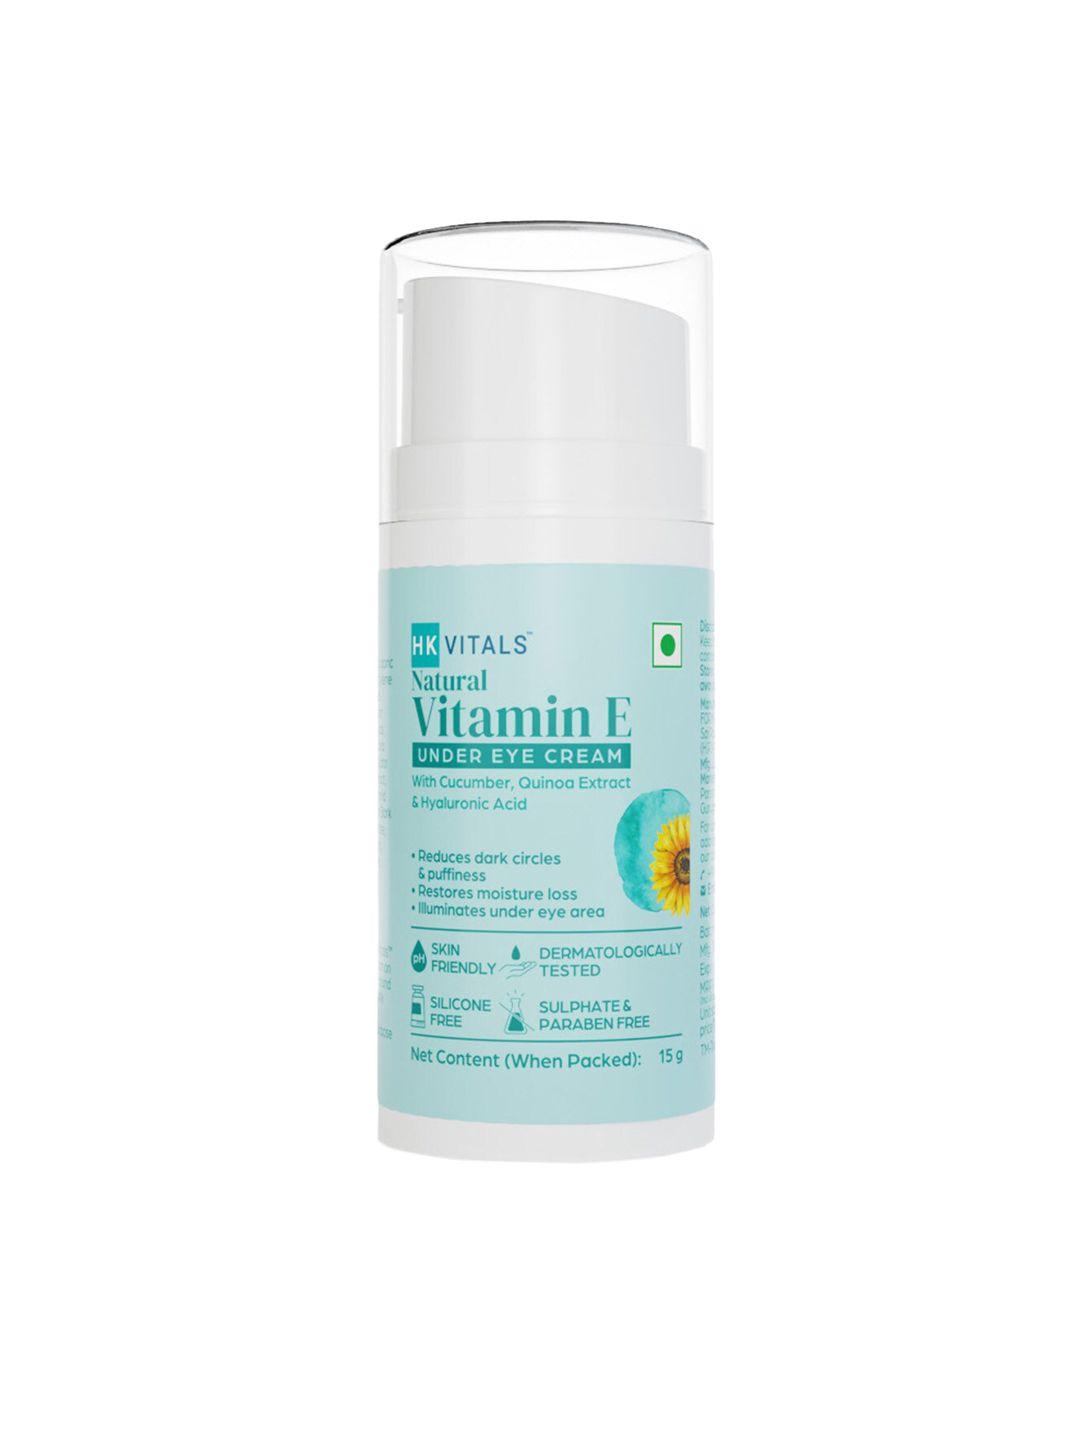 hk vitals by healthkart vitamin e under eye cream for dark circles & puffiness - 15g